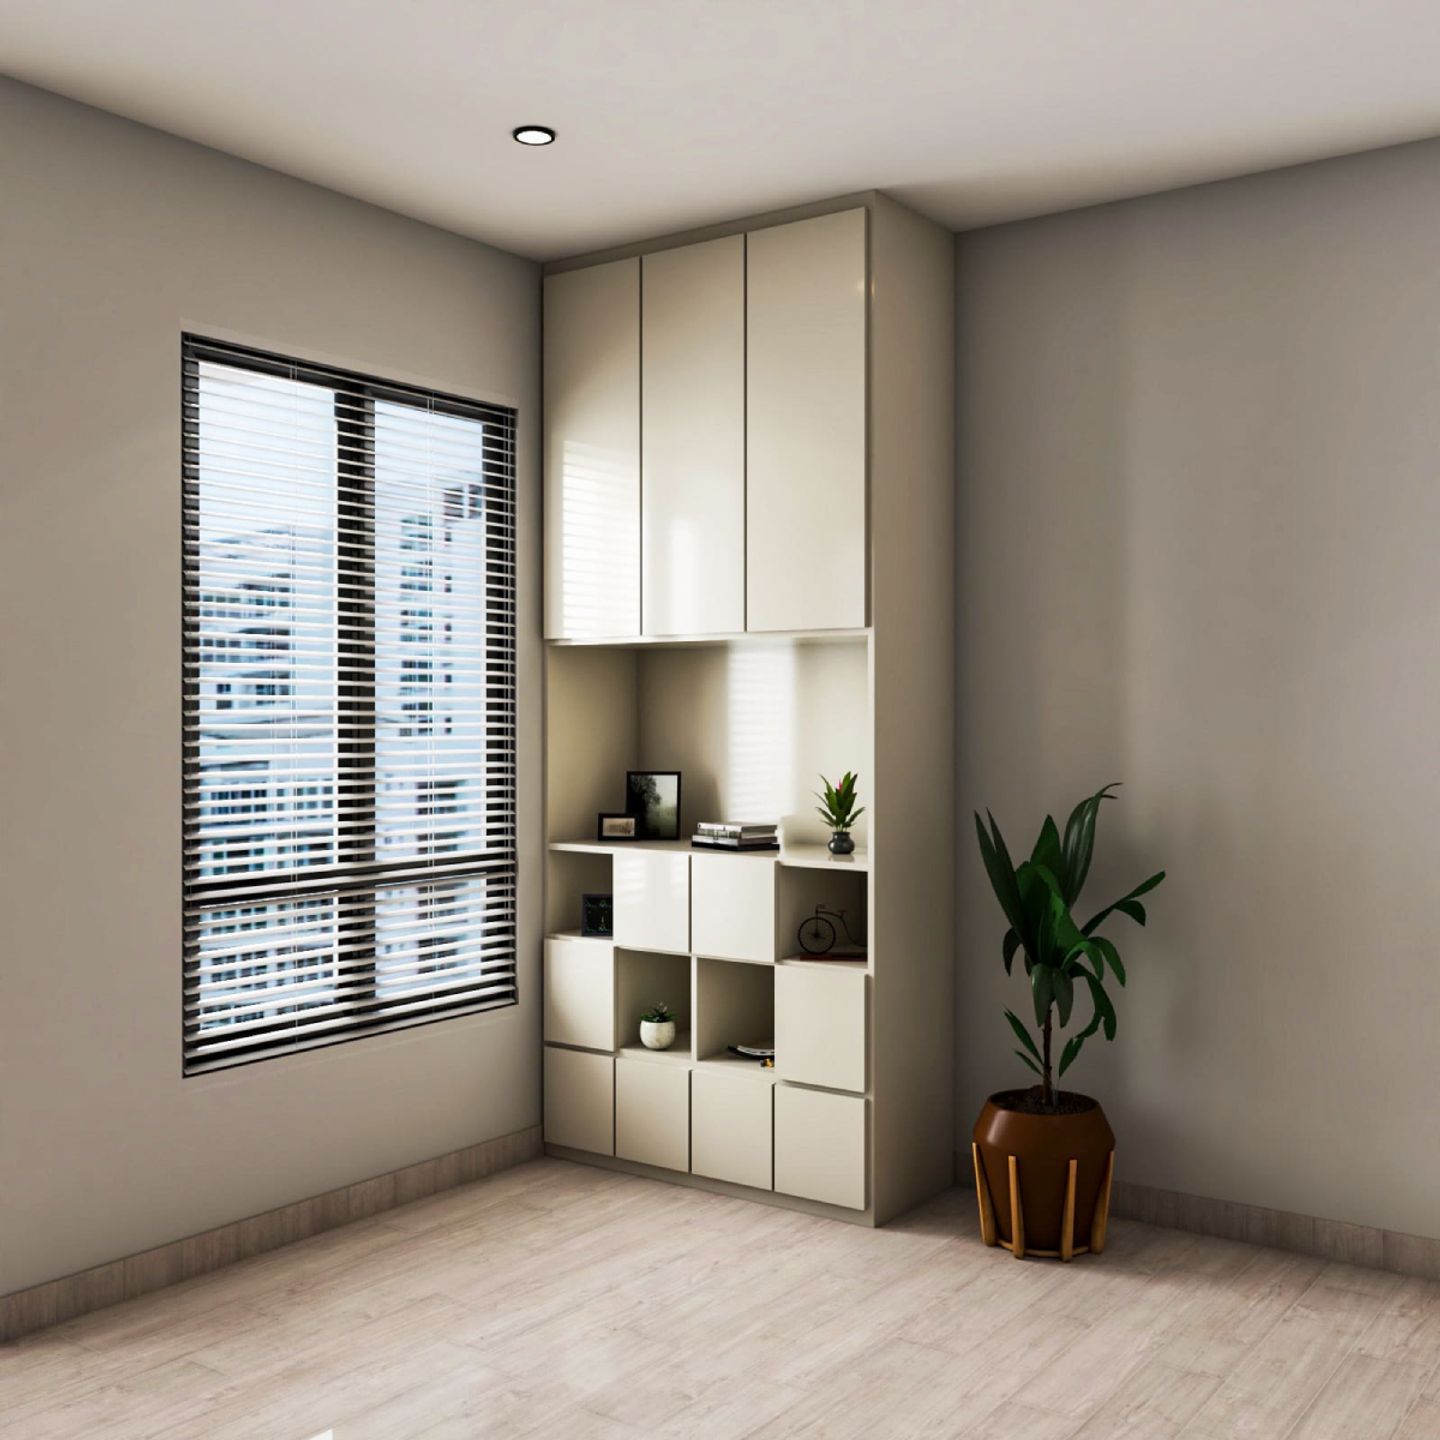 Contemporary Interior Design With Open And Closed Storage - Livspace